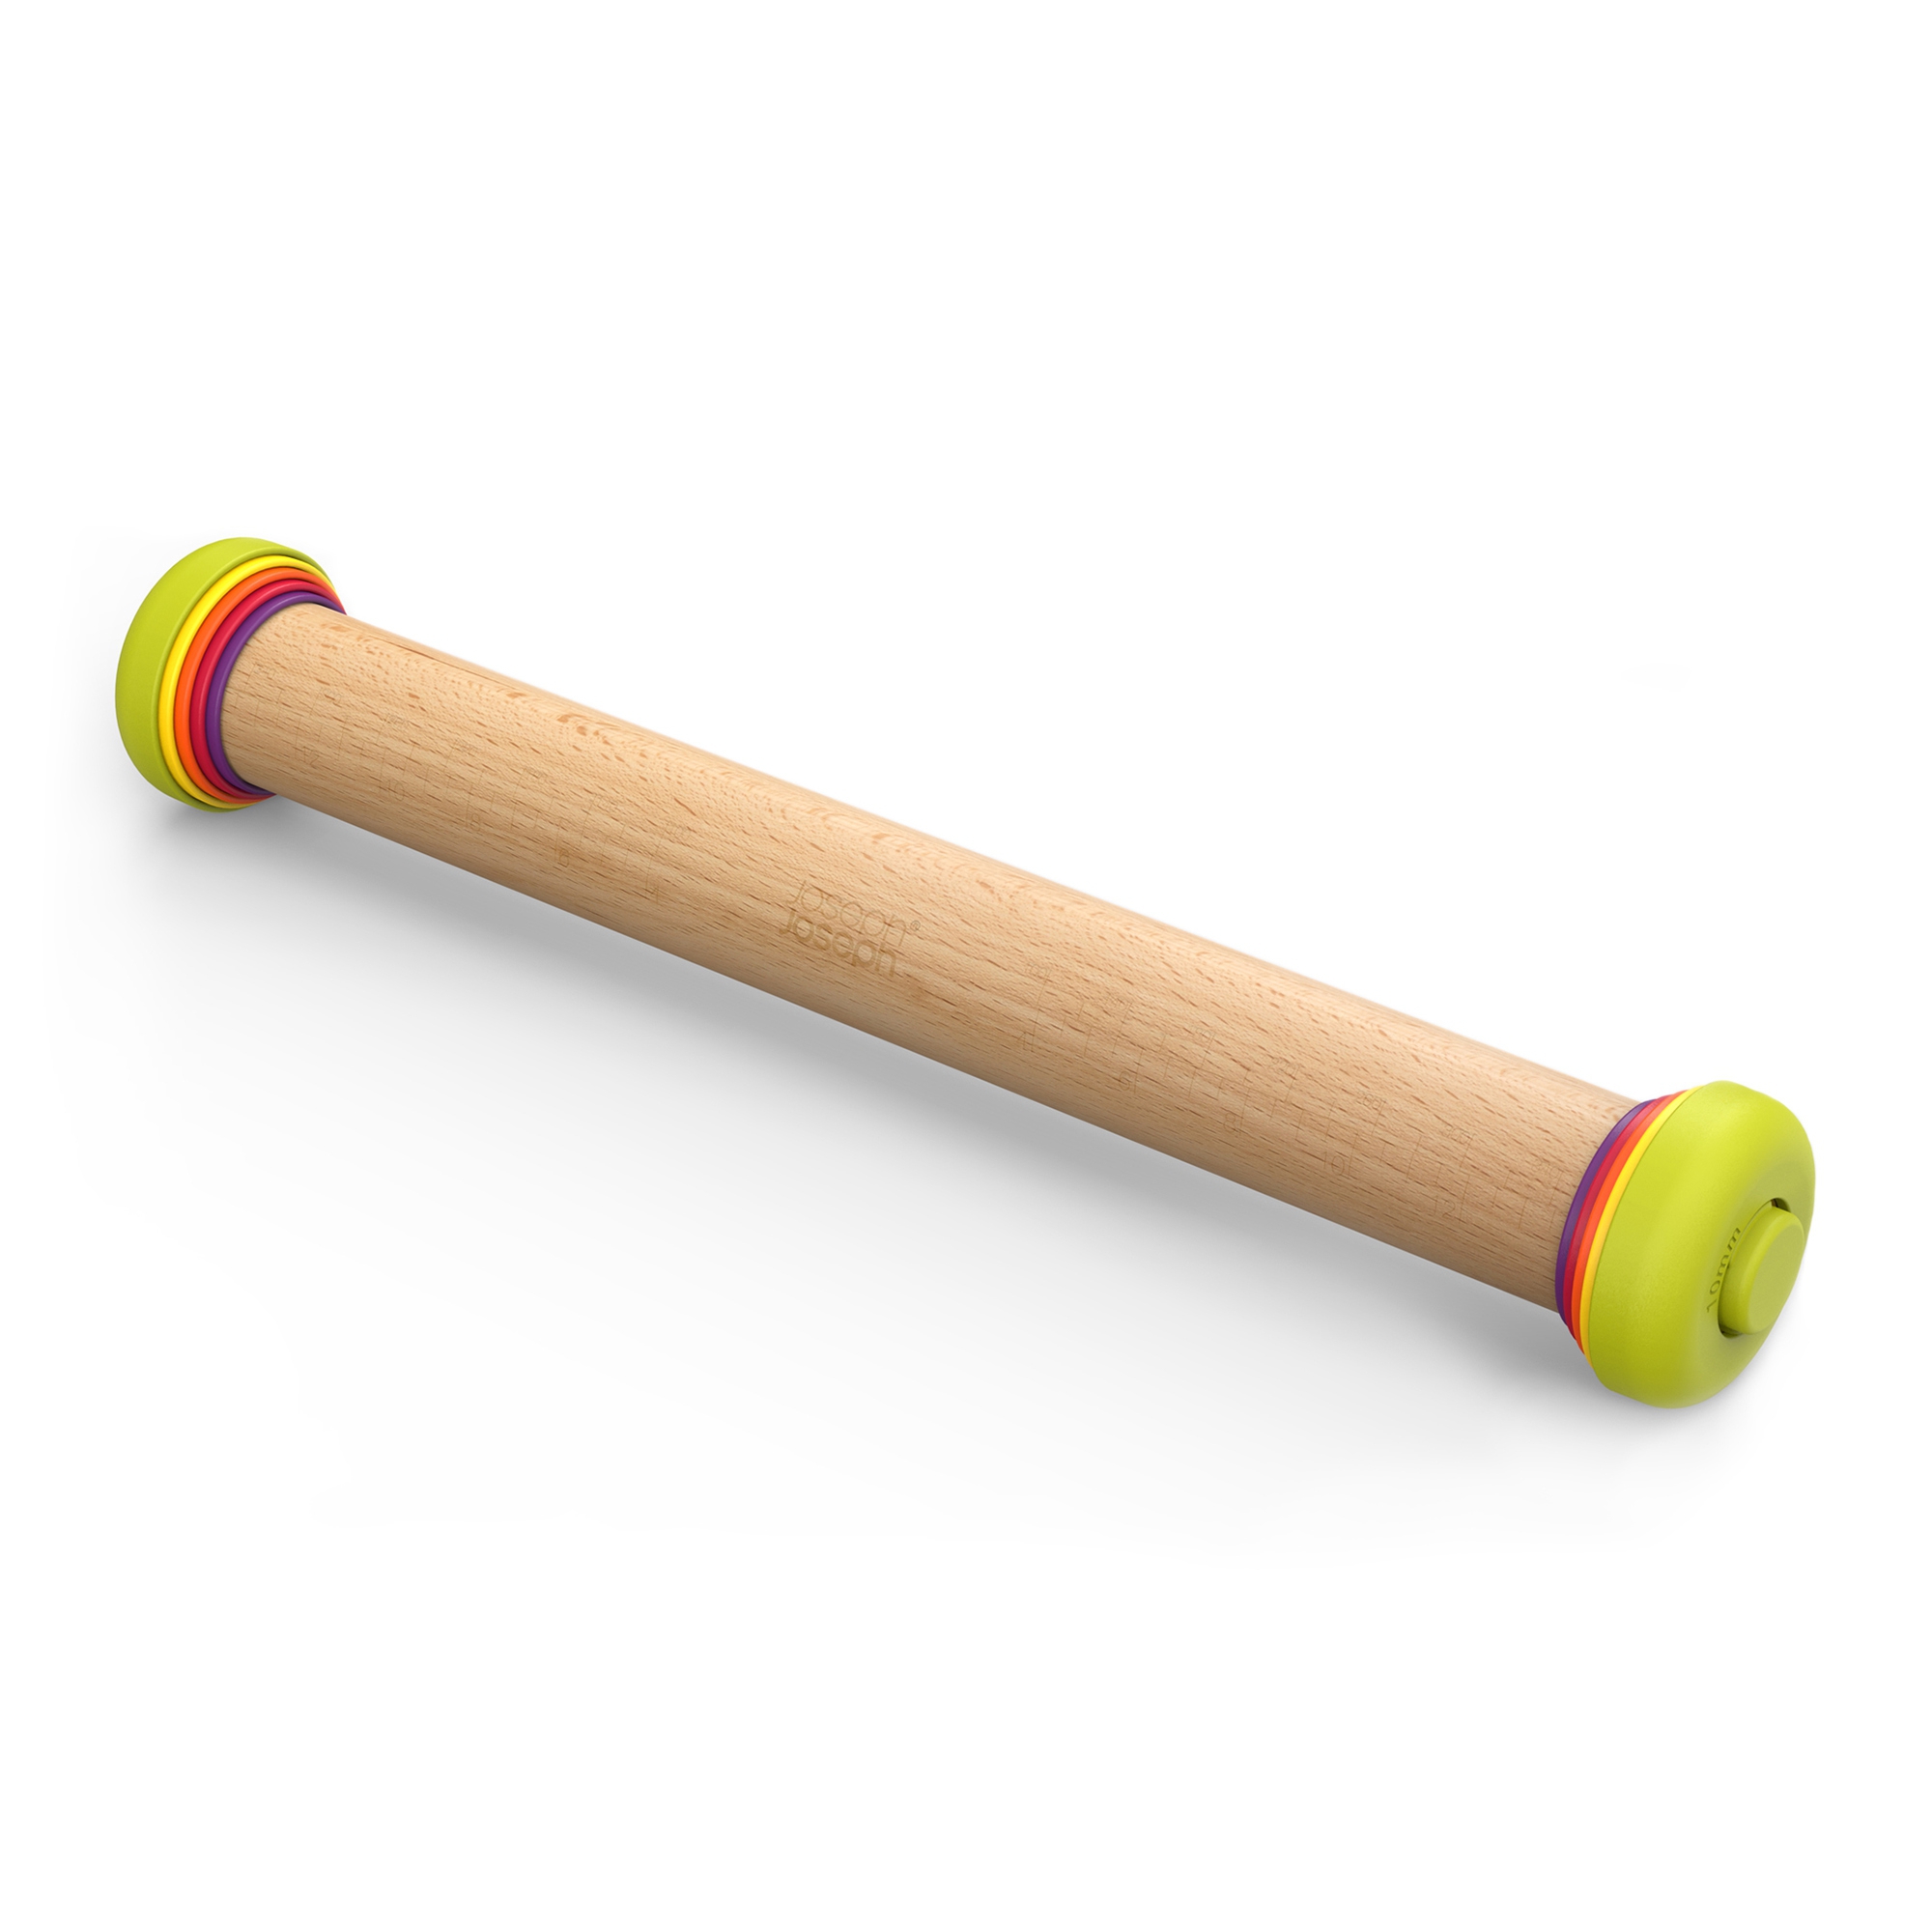 Joseph Joseph - Adjustable Rolling Pin multicolour